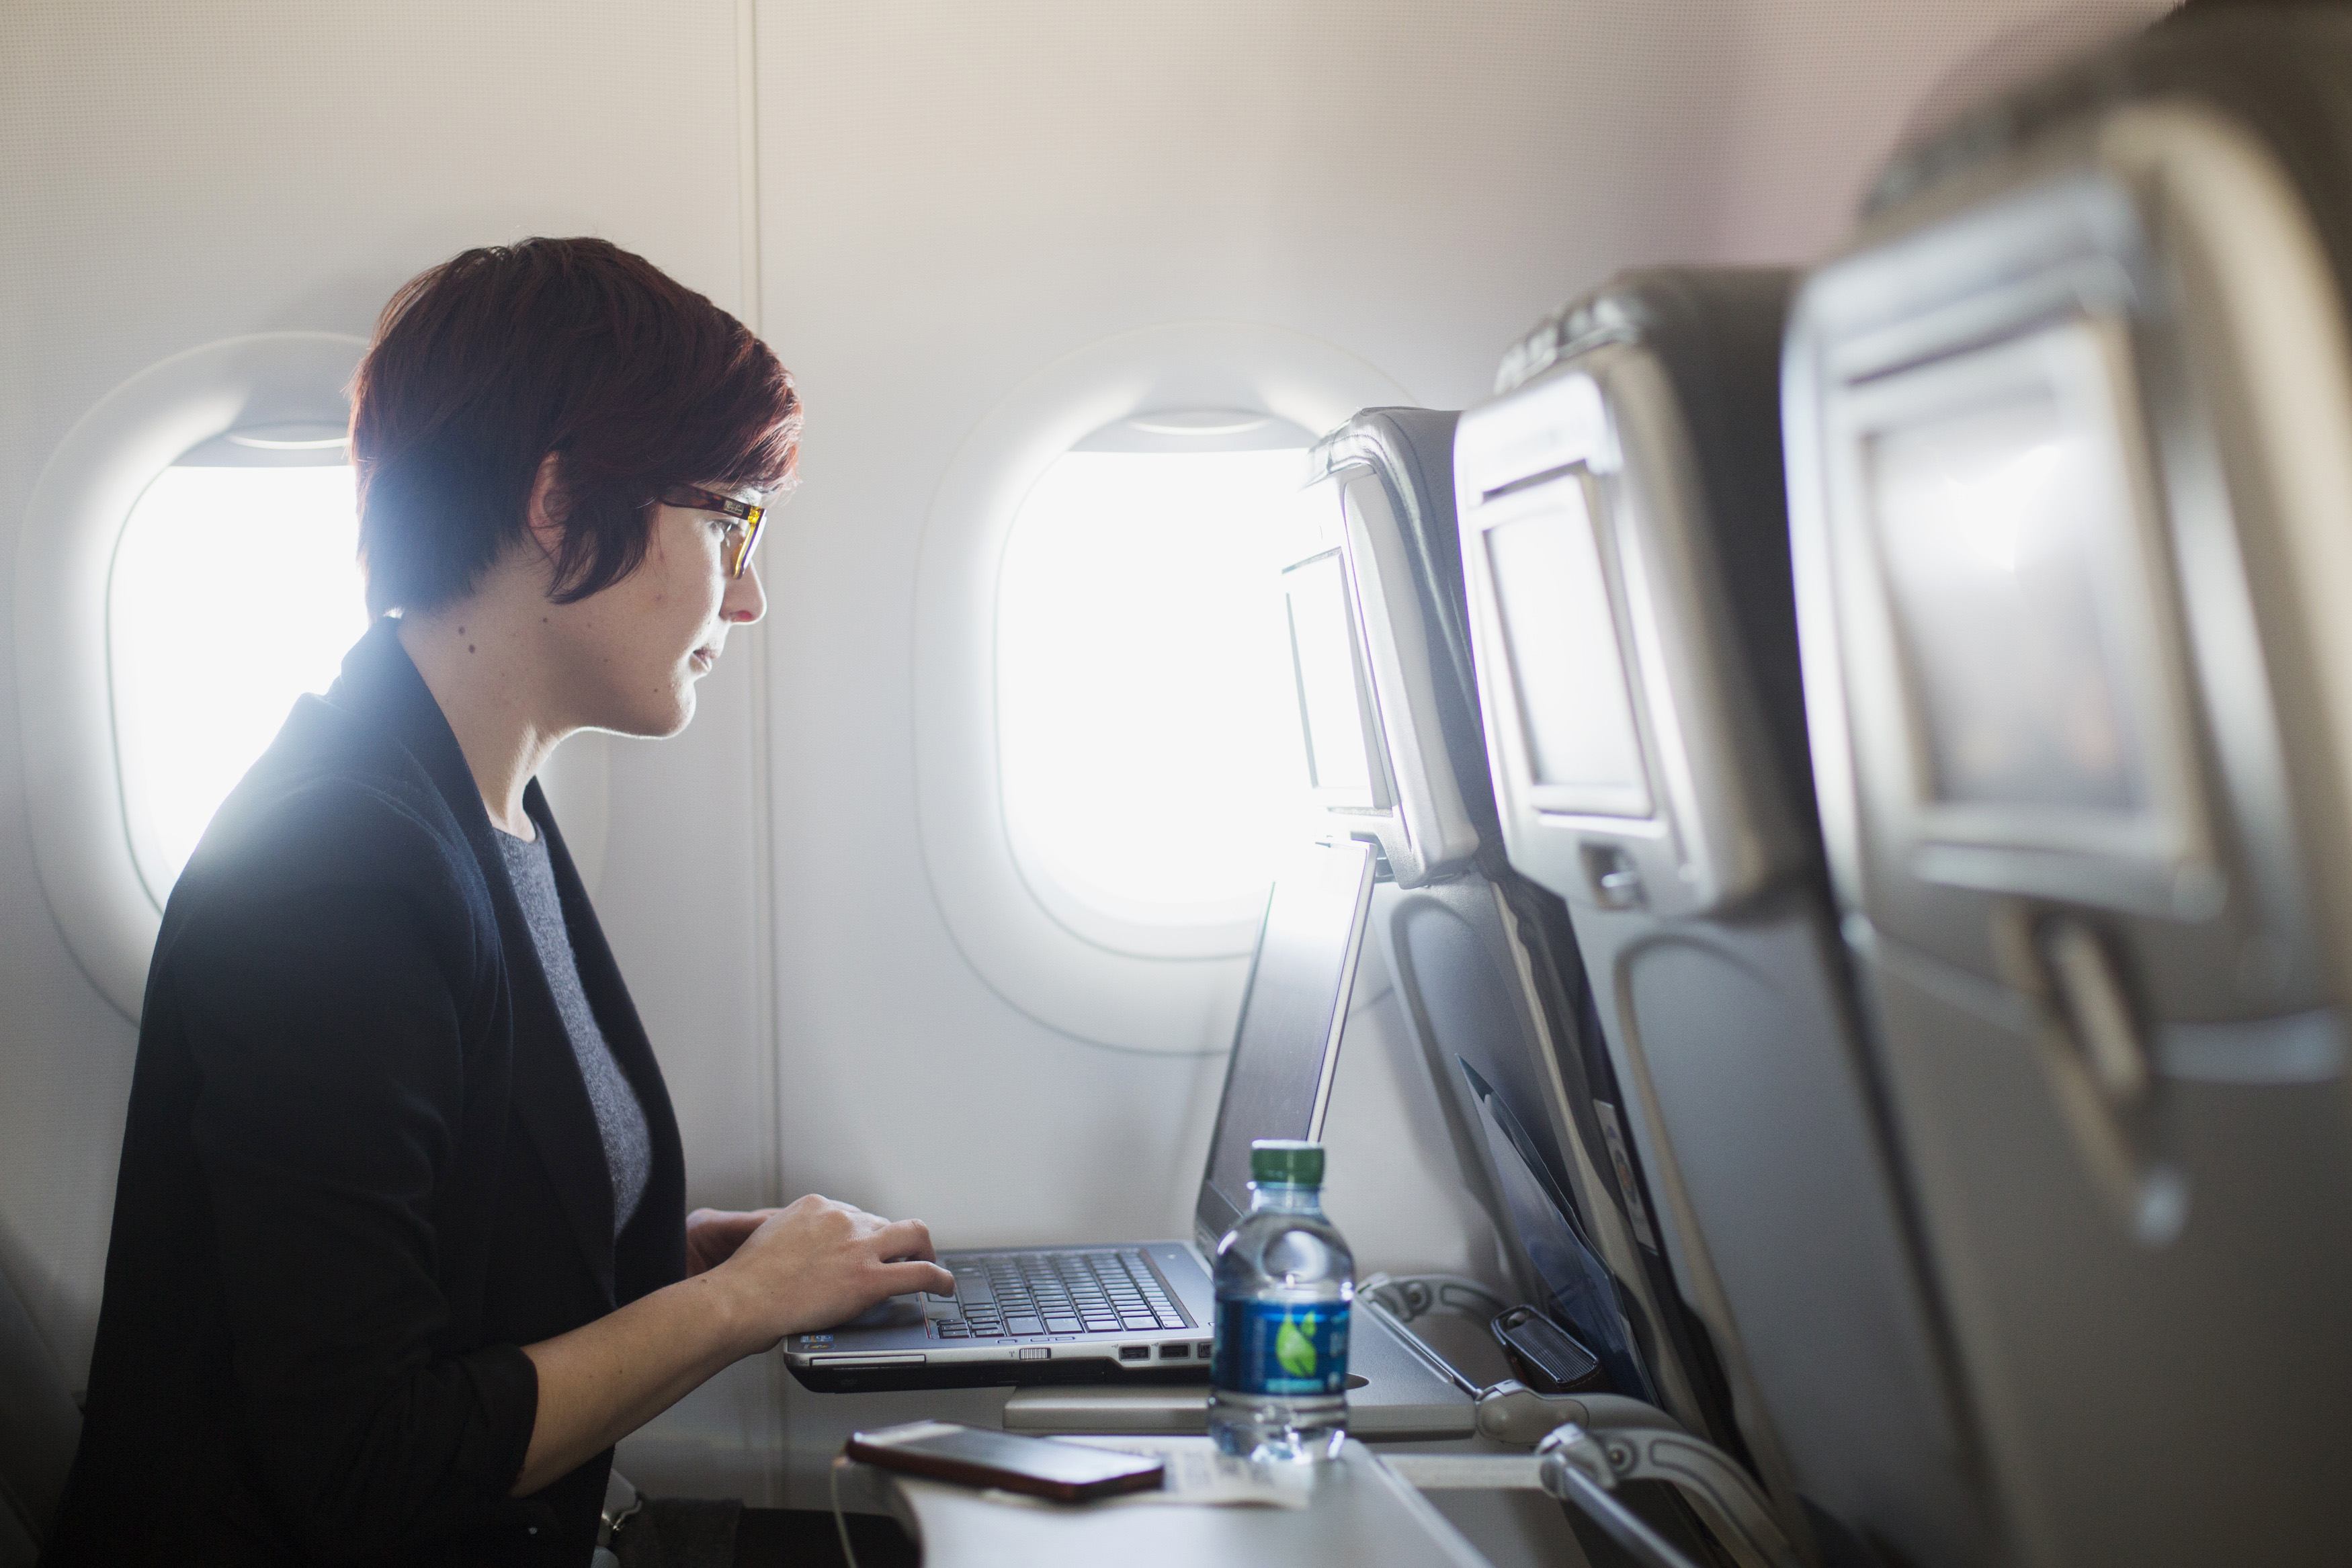 Столик в самолете. Откидной столик в самолете. Столик в самолёте пассажира. Интернет в самолете. Укачало в самолете.